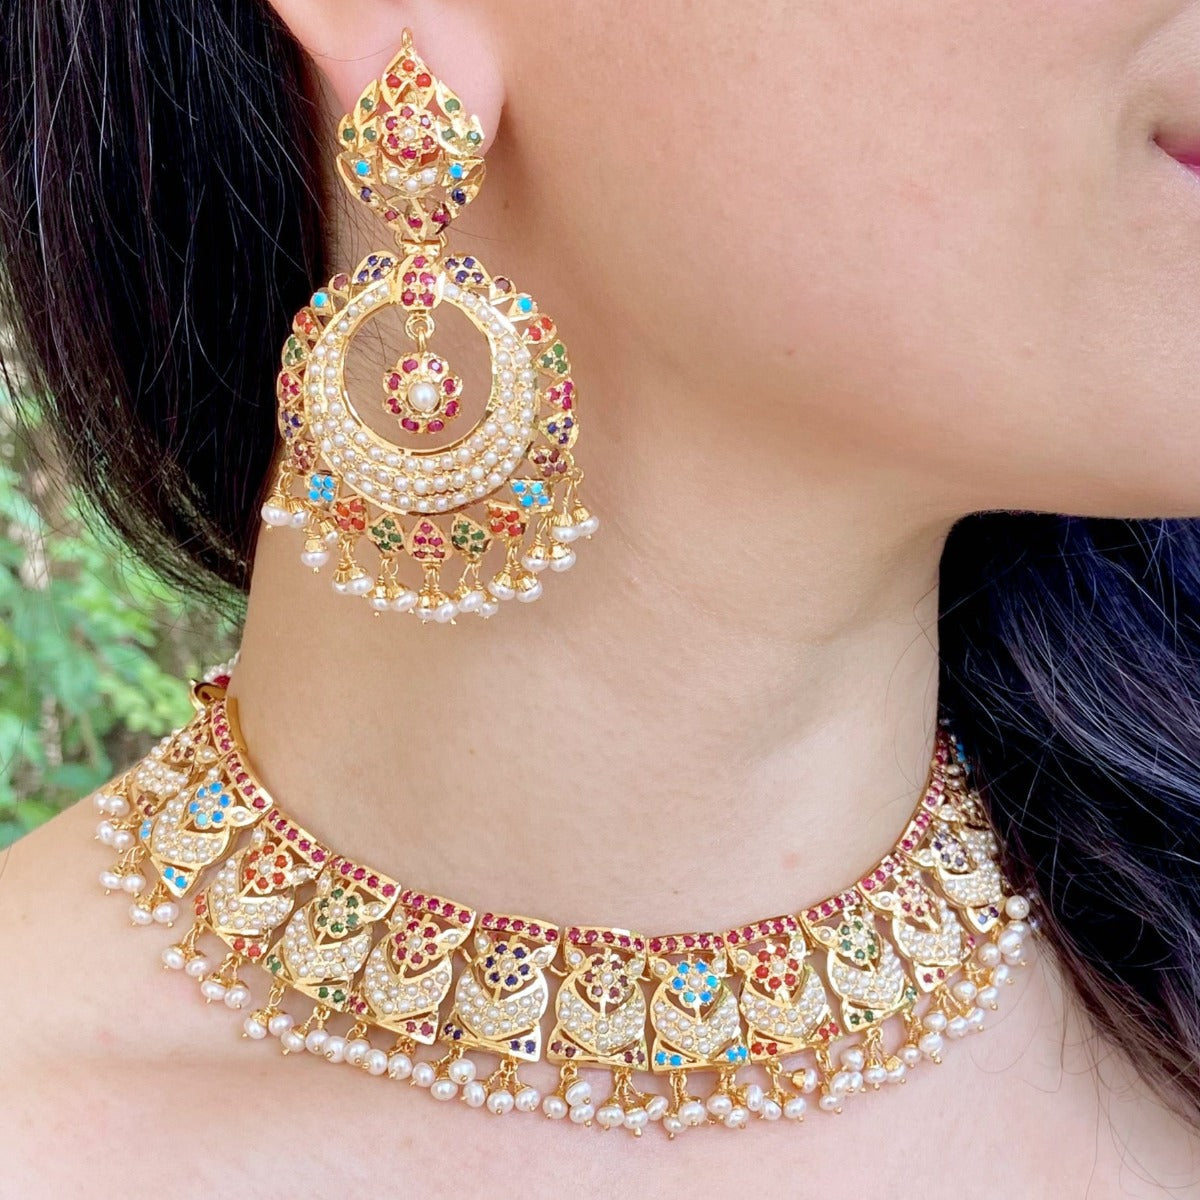 Hyderabadi navratna jewelry